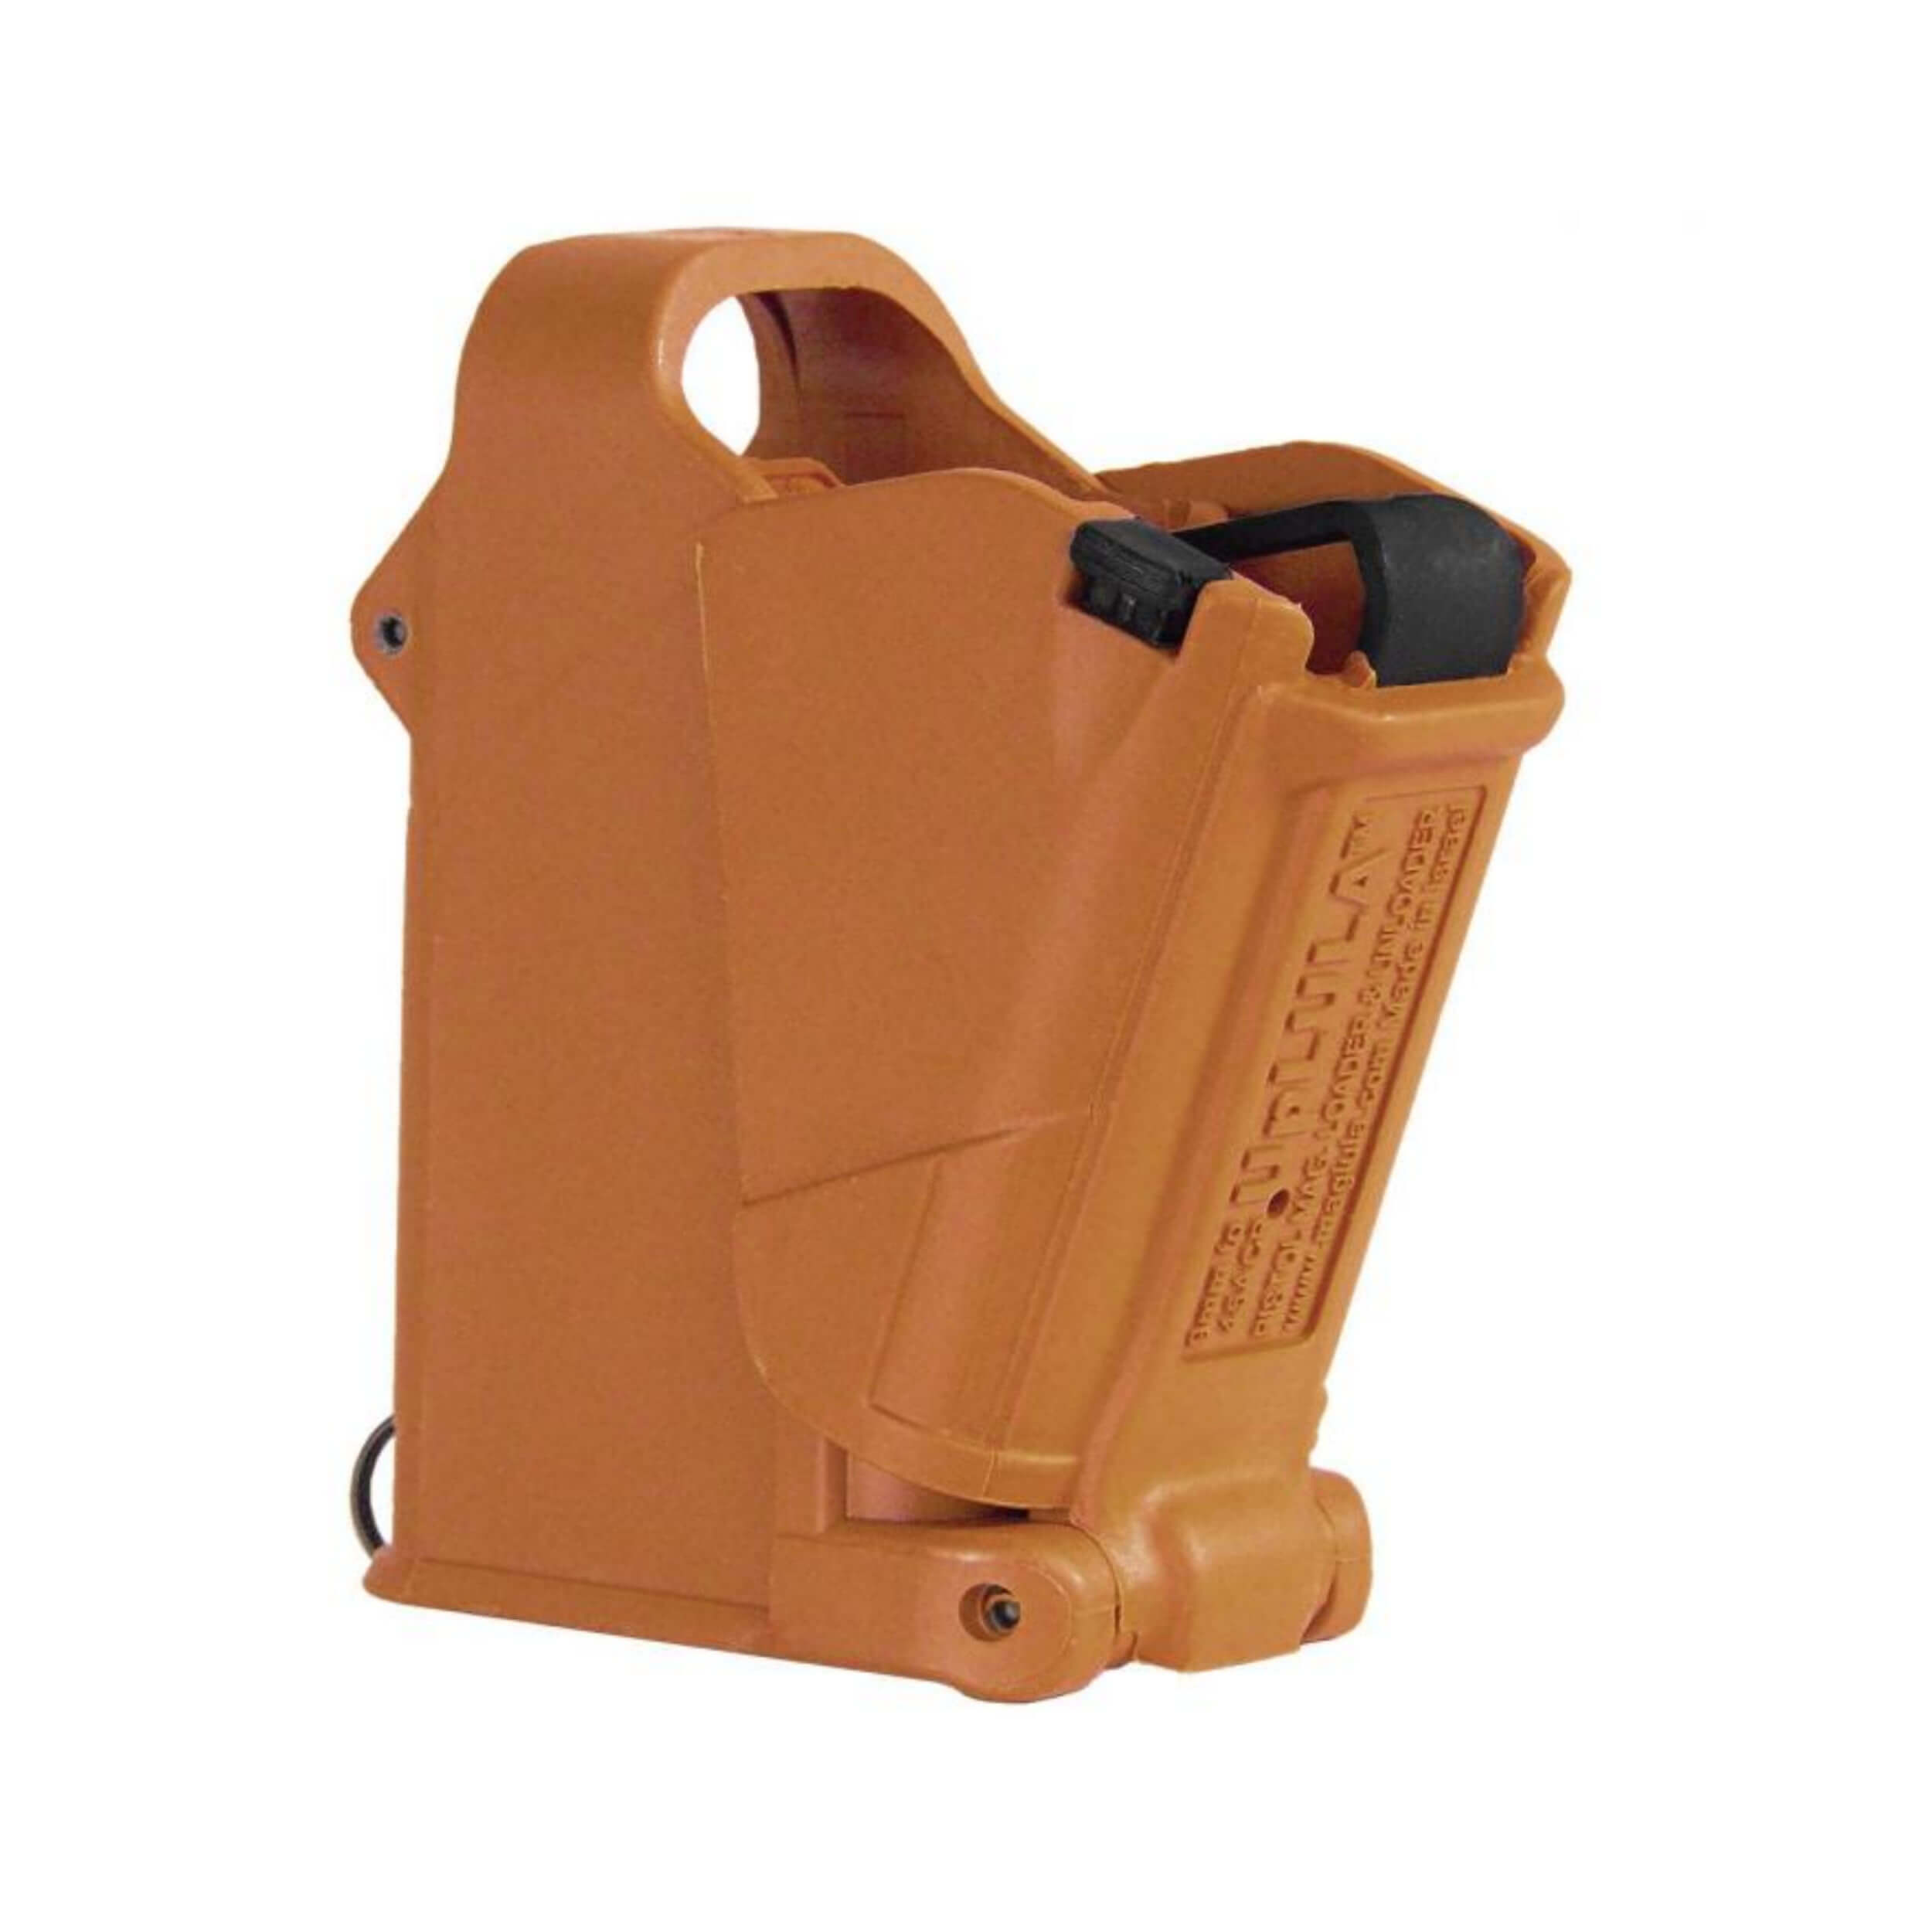 maglula® UpLULA®  9 mm to .45ACP universal pistol magazine loader – Brown Orange UP60BO